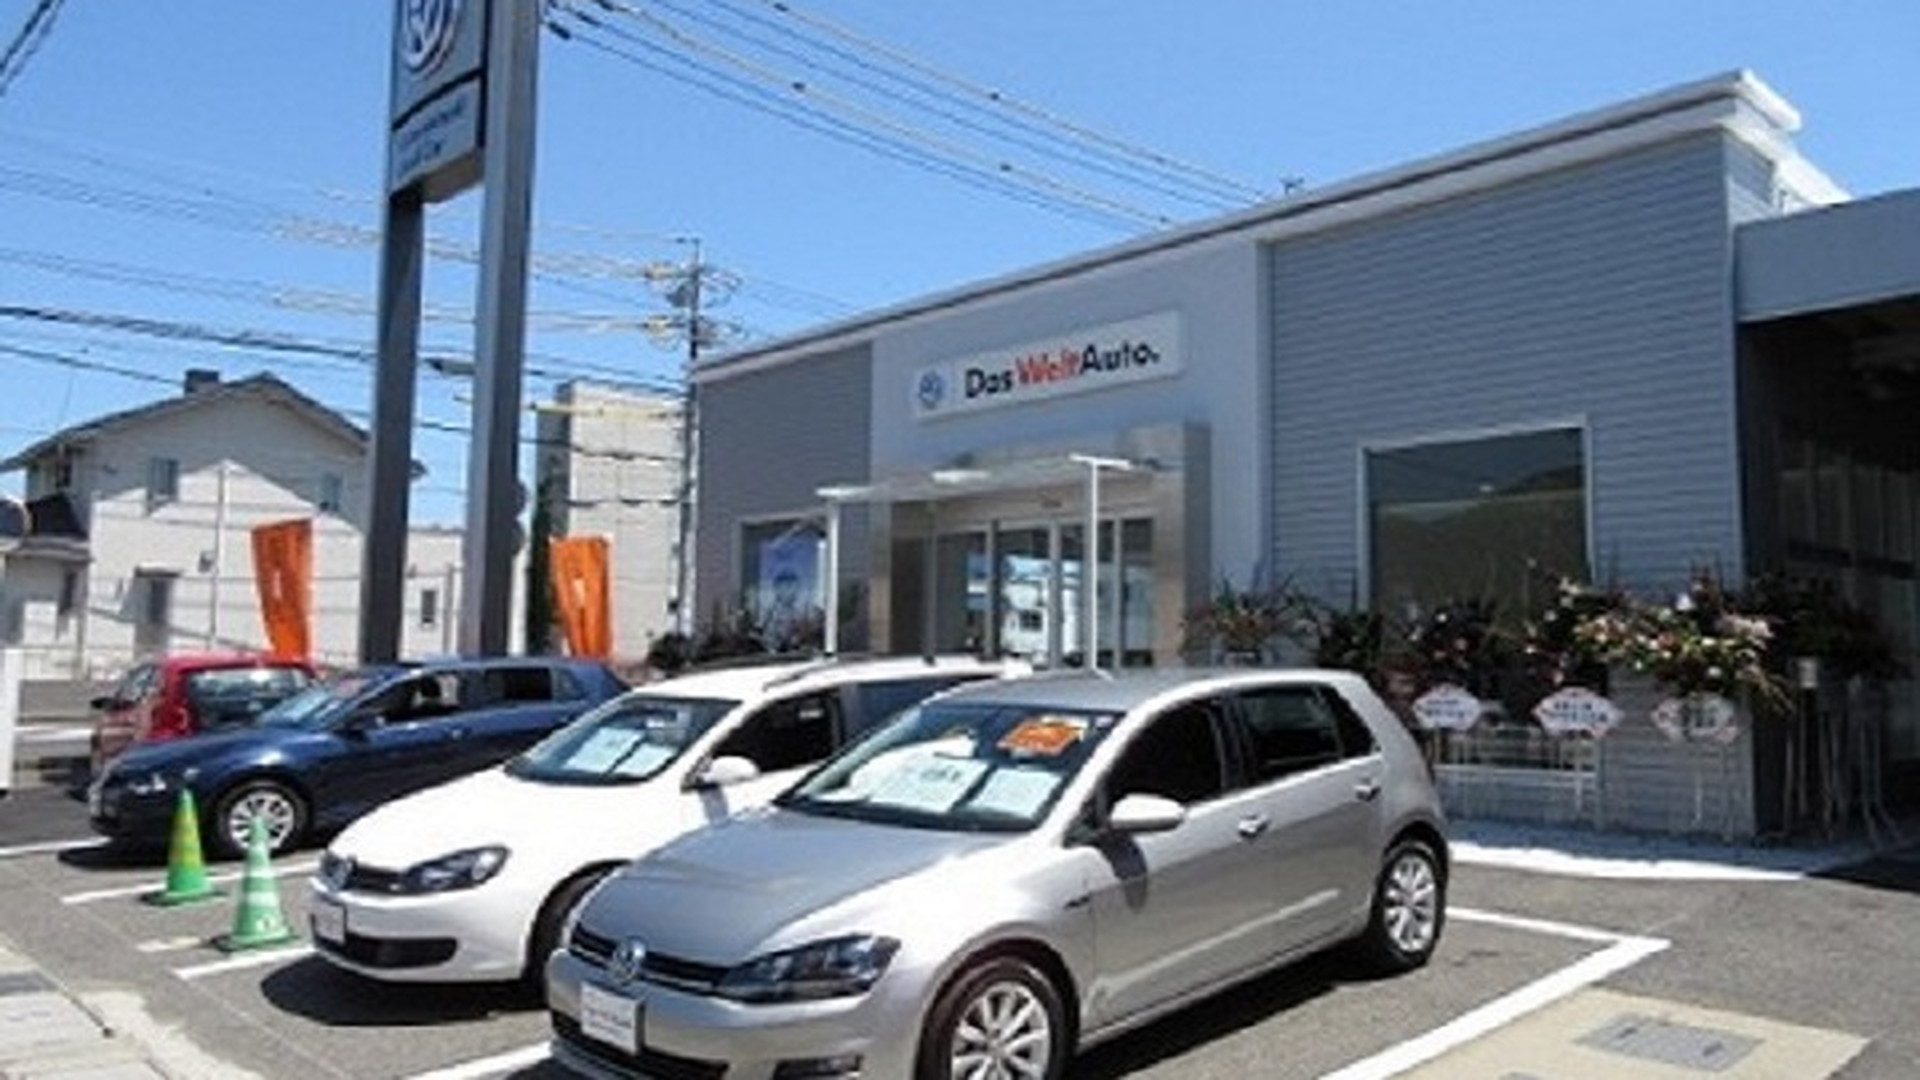 Top Volkswagen岐阜南 認定中古車センター Volkswagen Gifu Minami Guaranteed Used Car Center